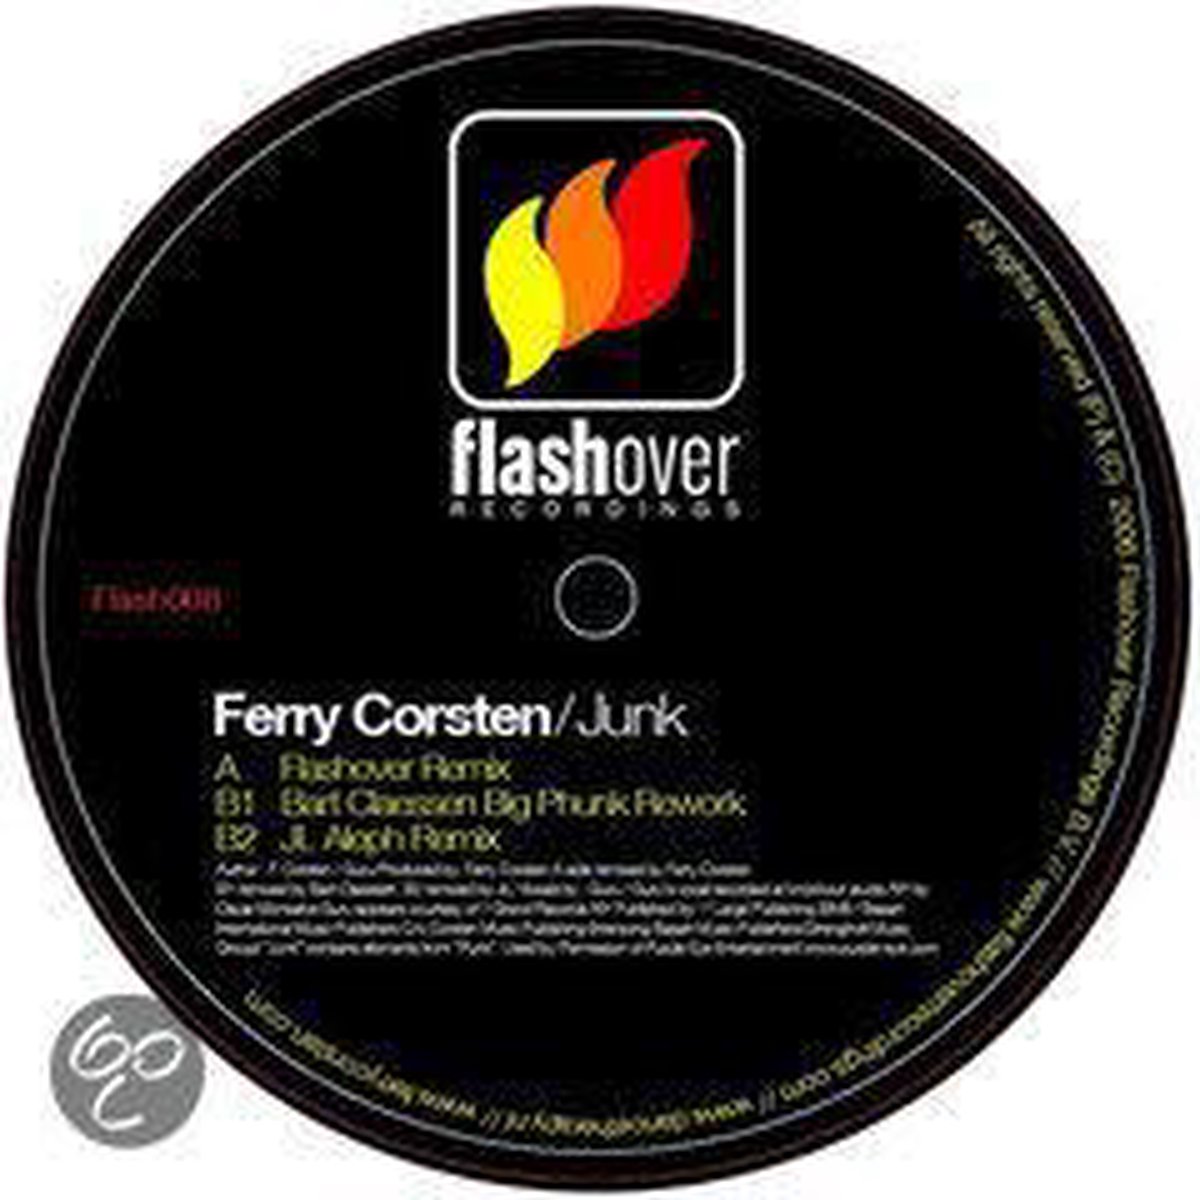 Junk - Ferry Corsten